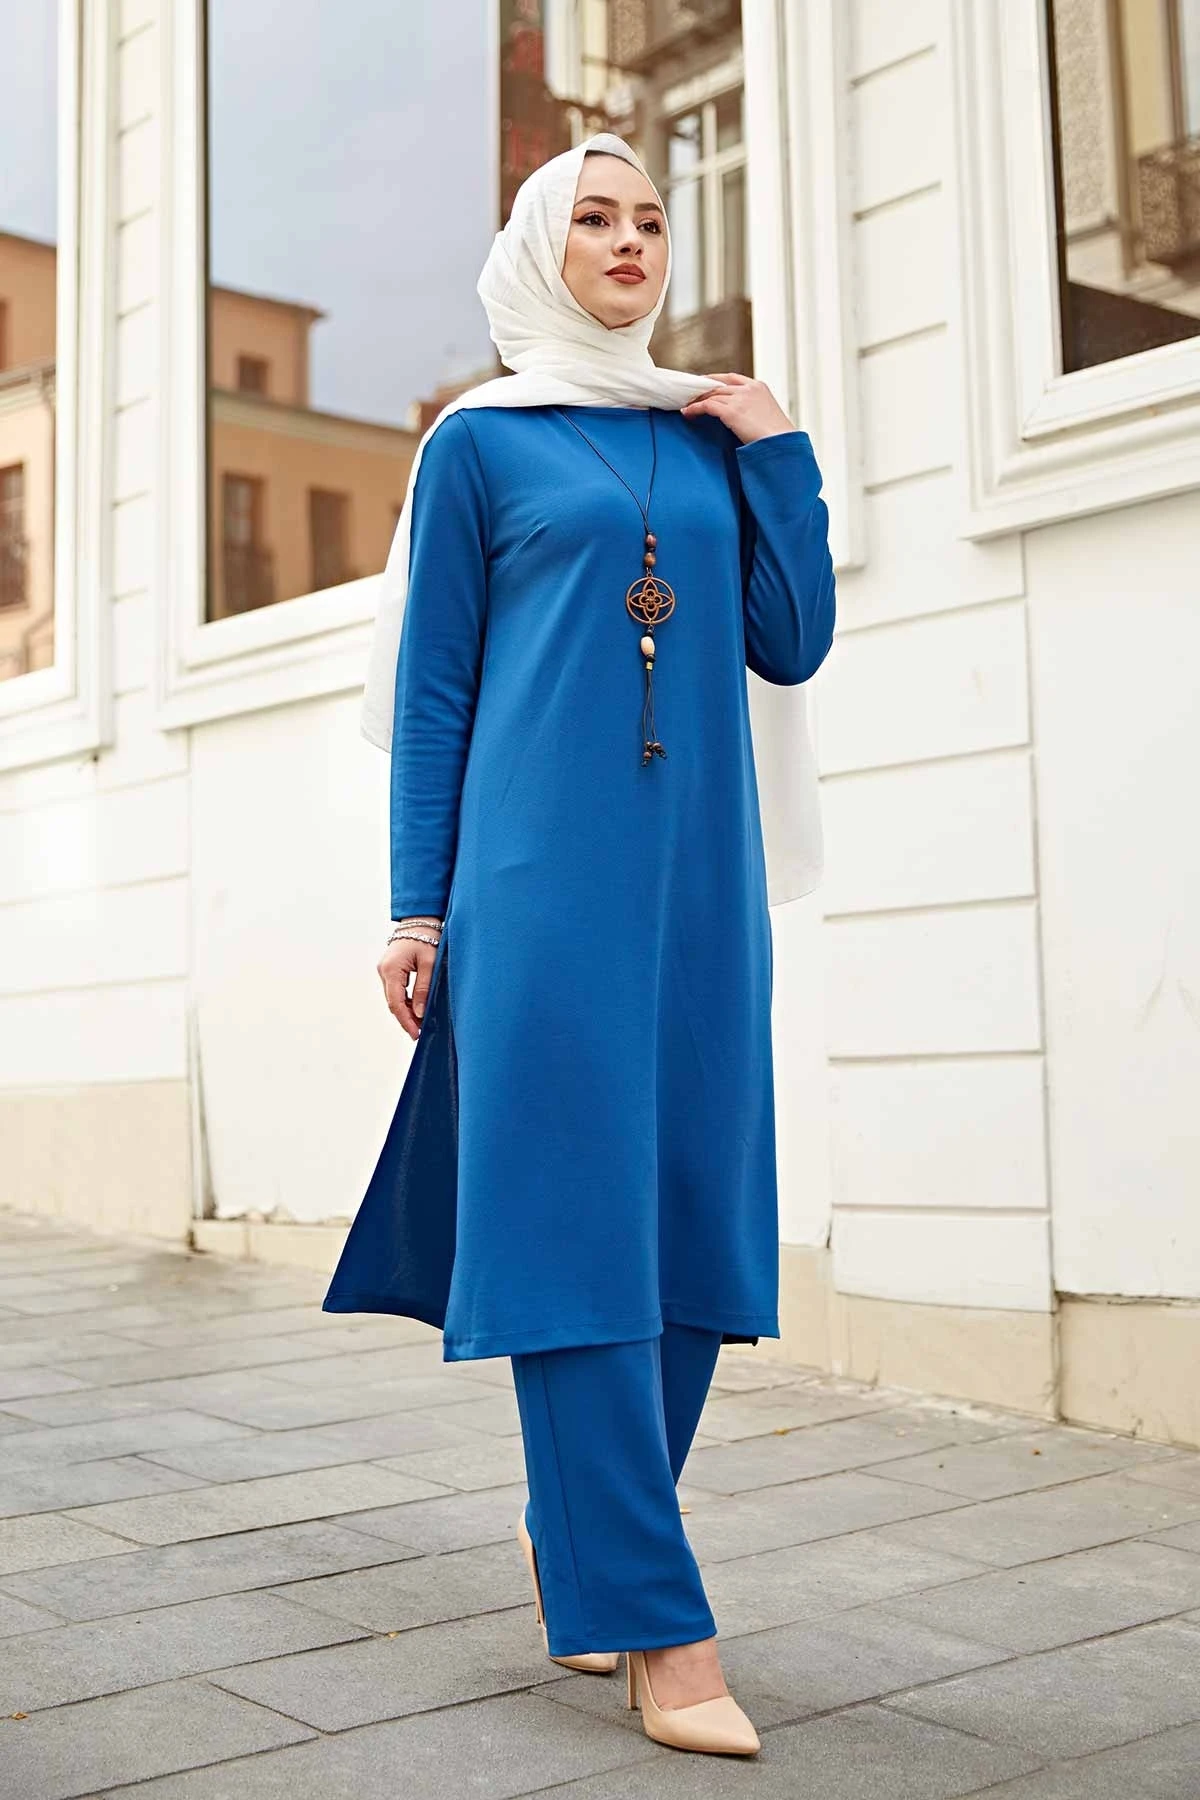 Women's Dual Suit Kombin Bottom Top Muslim dress hijab Muslim üstleri women suit 2021 abayas